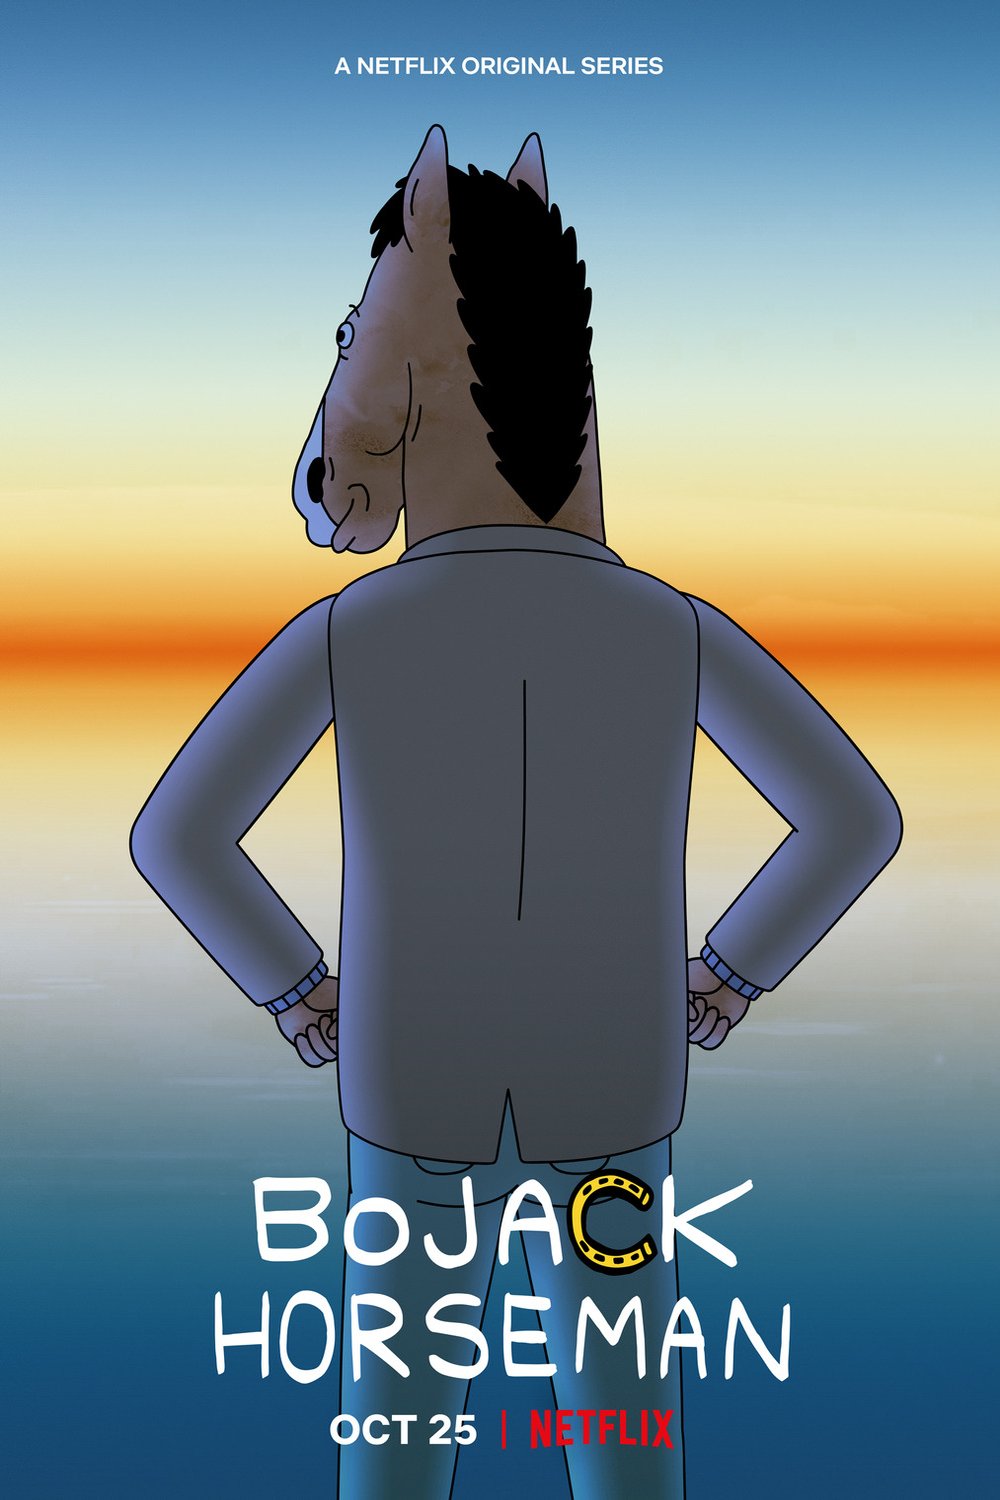 Poster of the movie BoJack Horseman